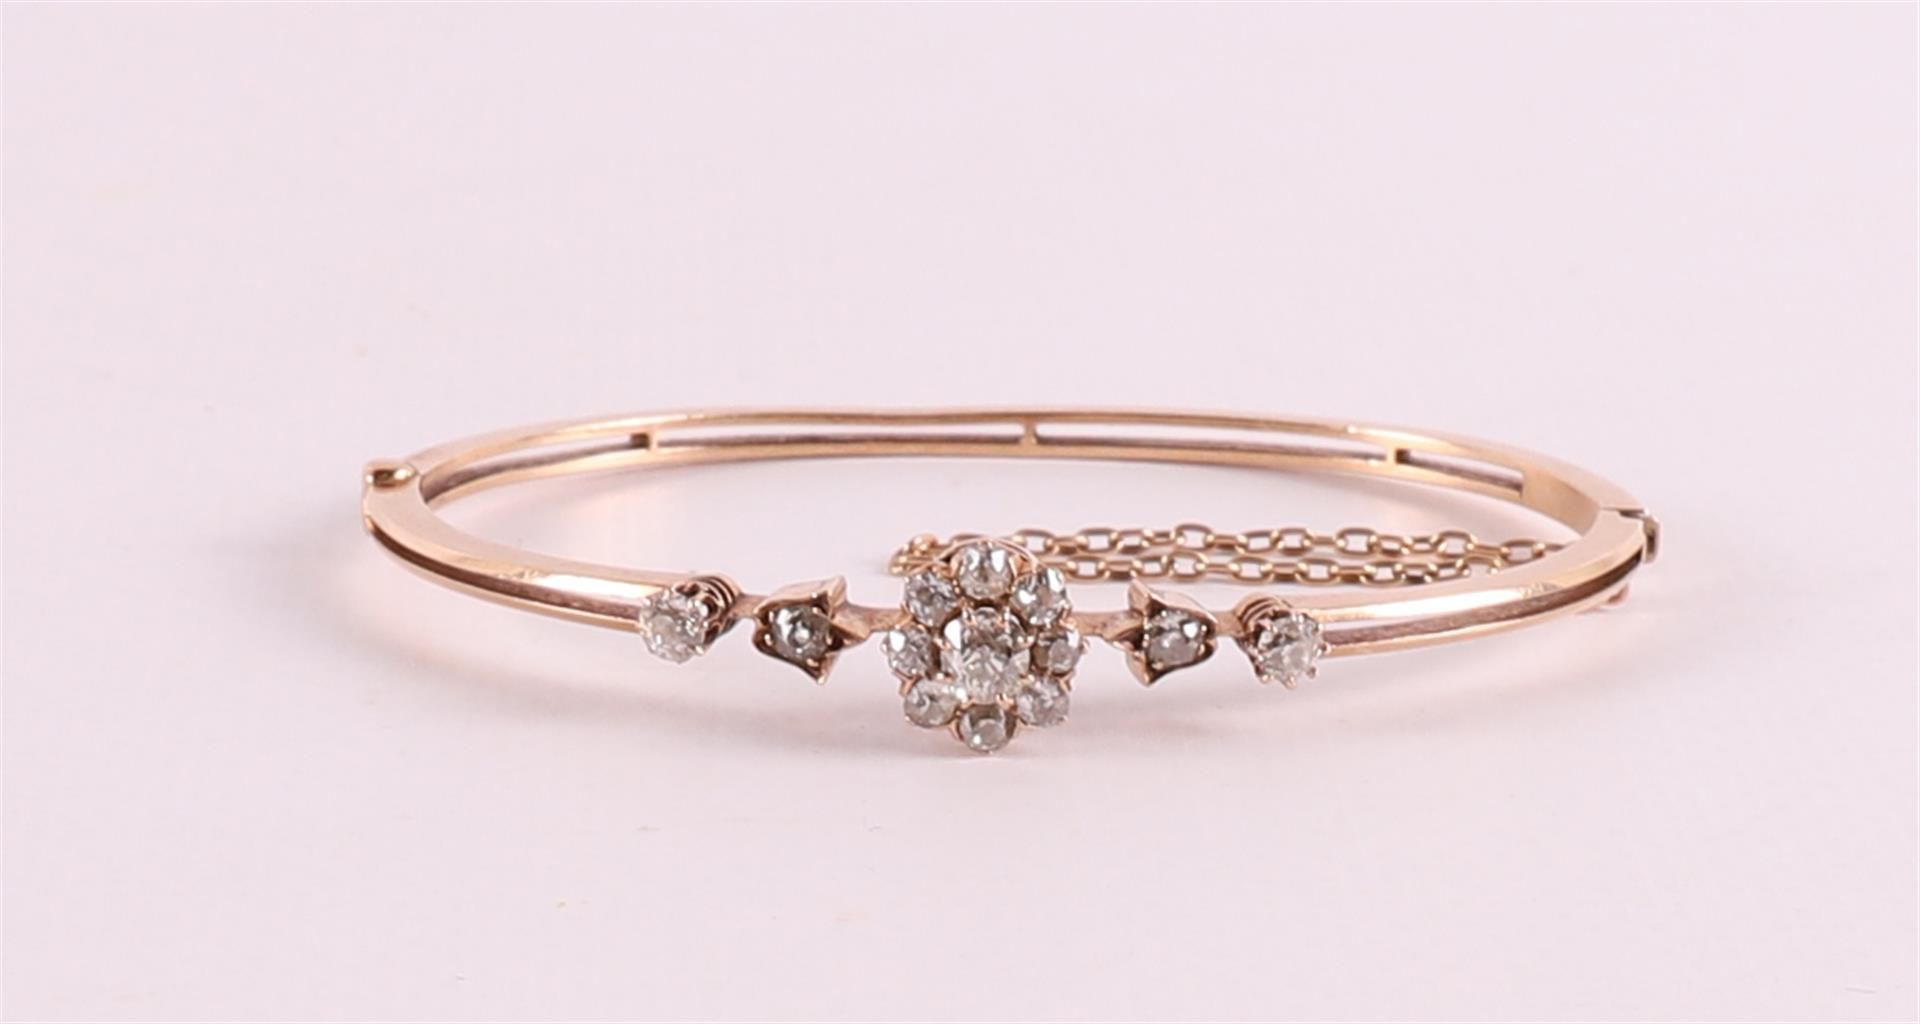 A 14 kt 585/1000 rose gold rigid bracelet with diamonds.